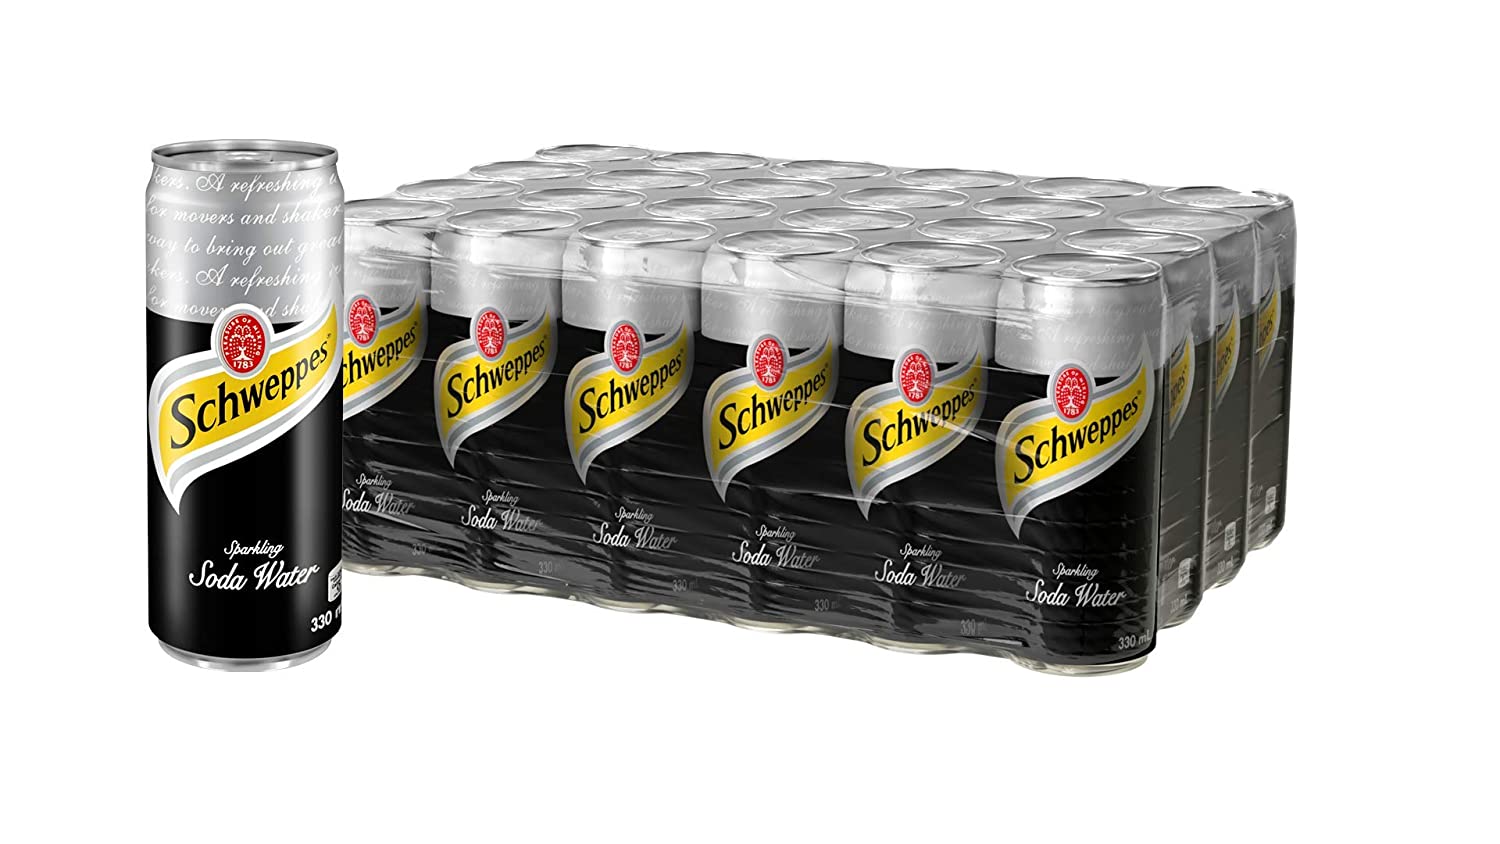 Schwep Soda Water – 330ml x 24 cans